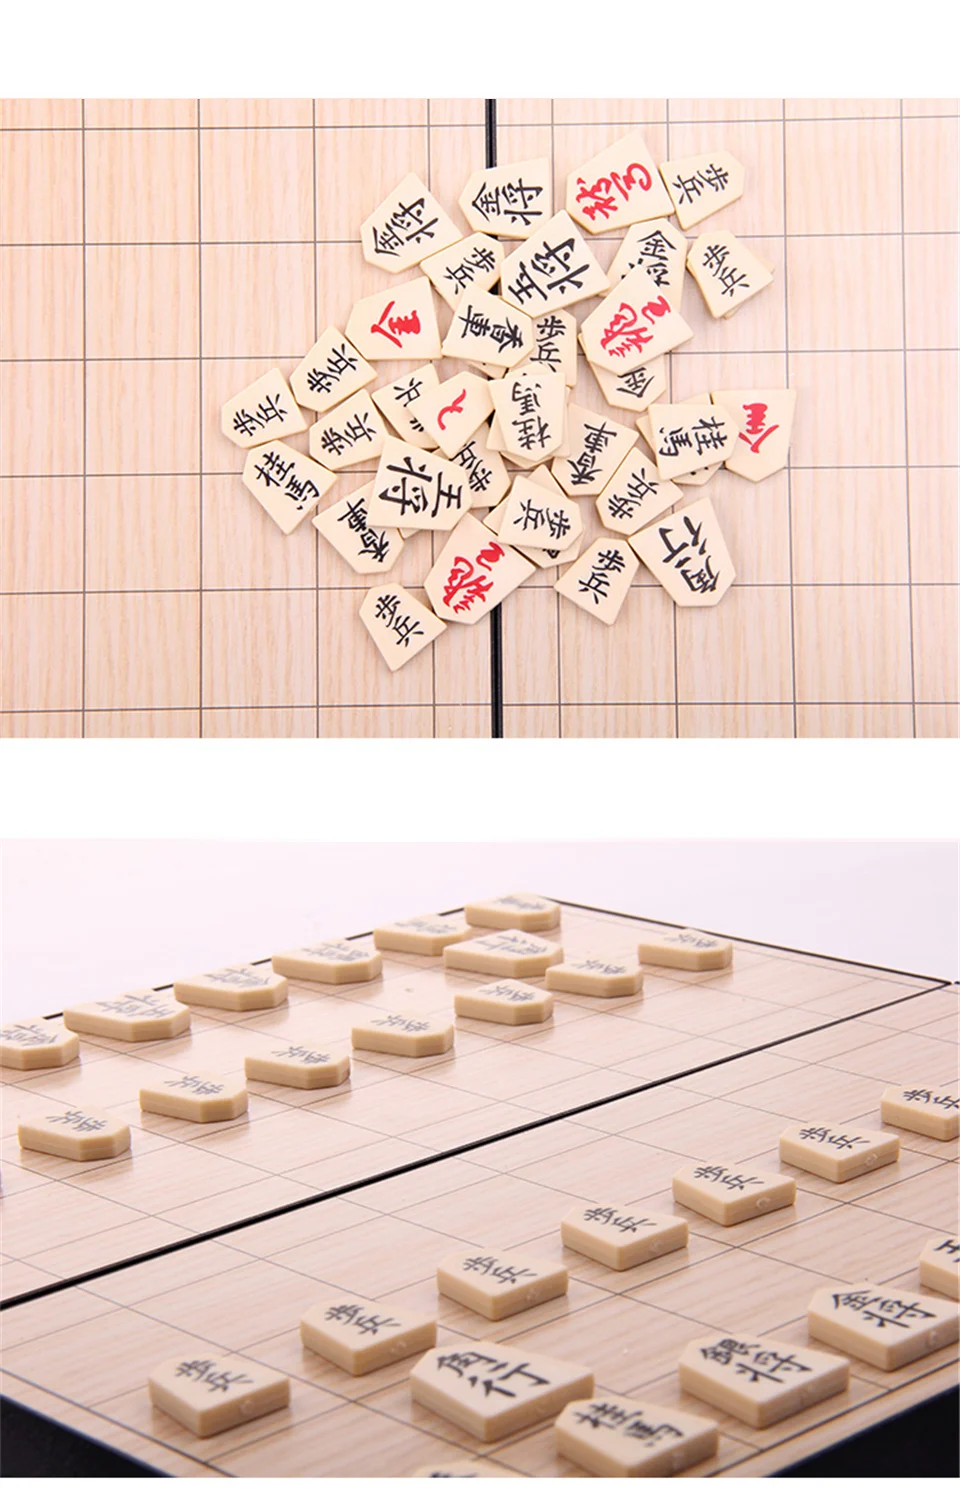 BSTFAMLY Japan Shogi 25*25*2 см Магнитная Складная Международная шахматная игра, складная японская шахматная игра Sho-gi, детский подарок J01